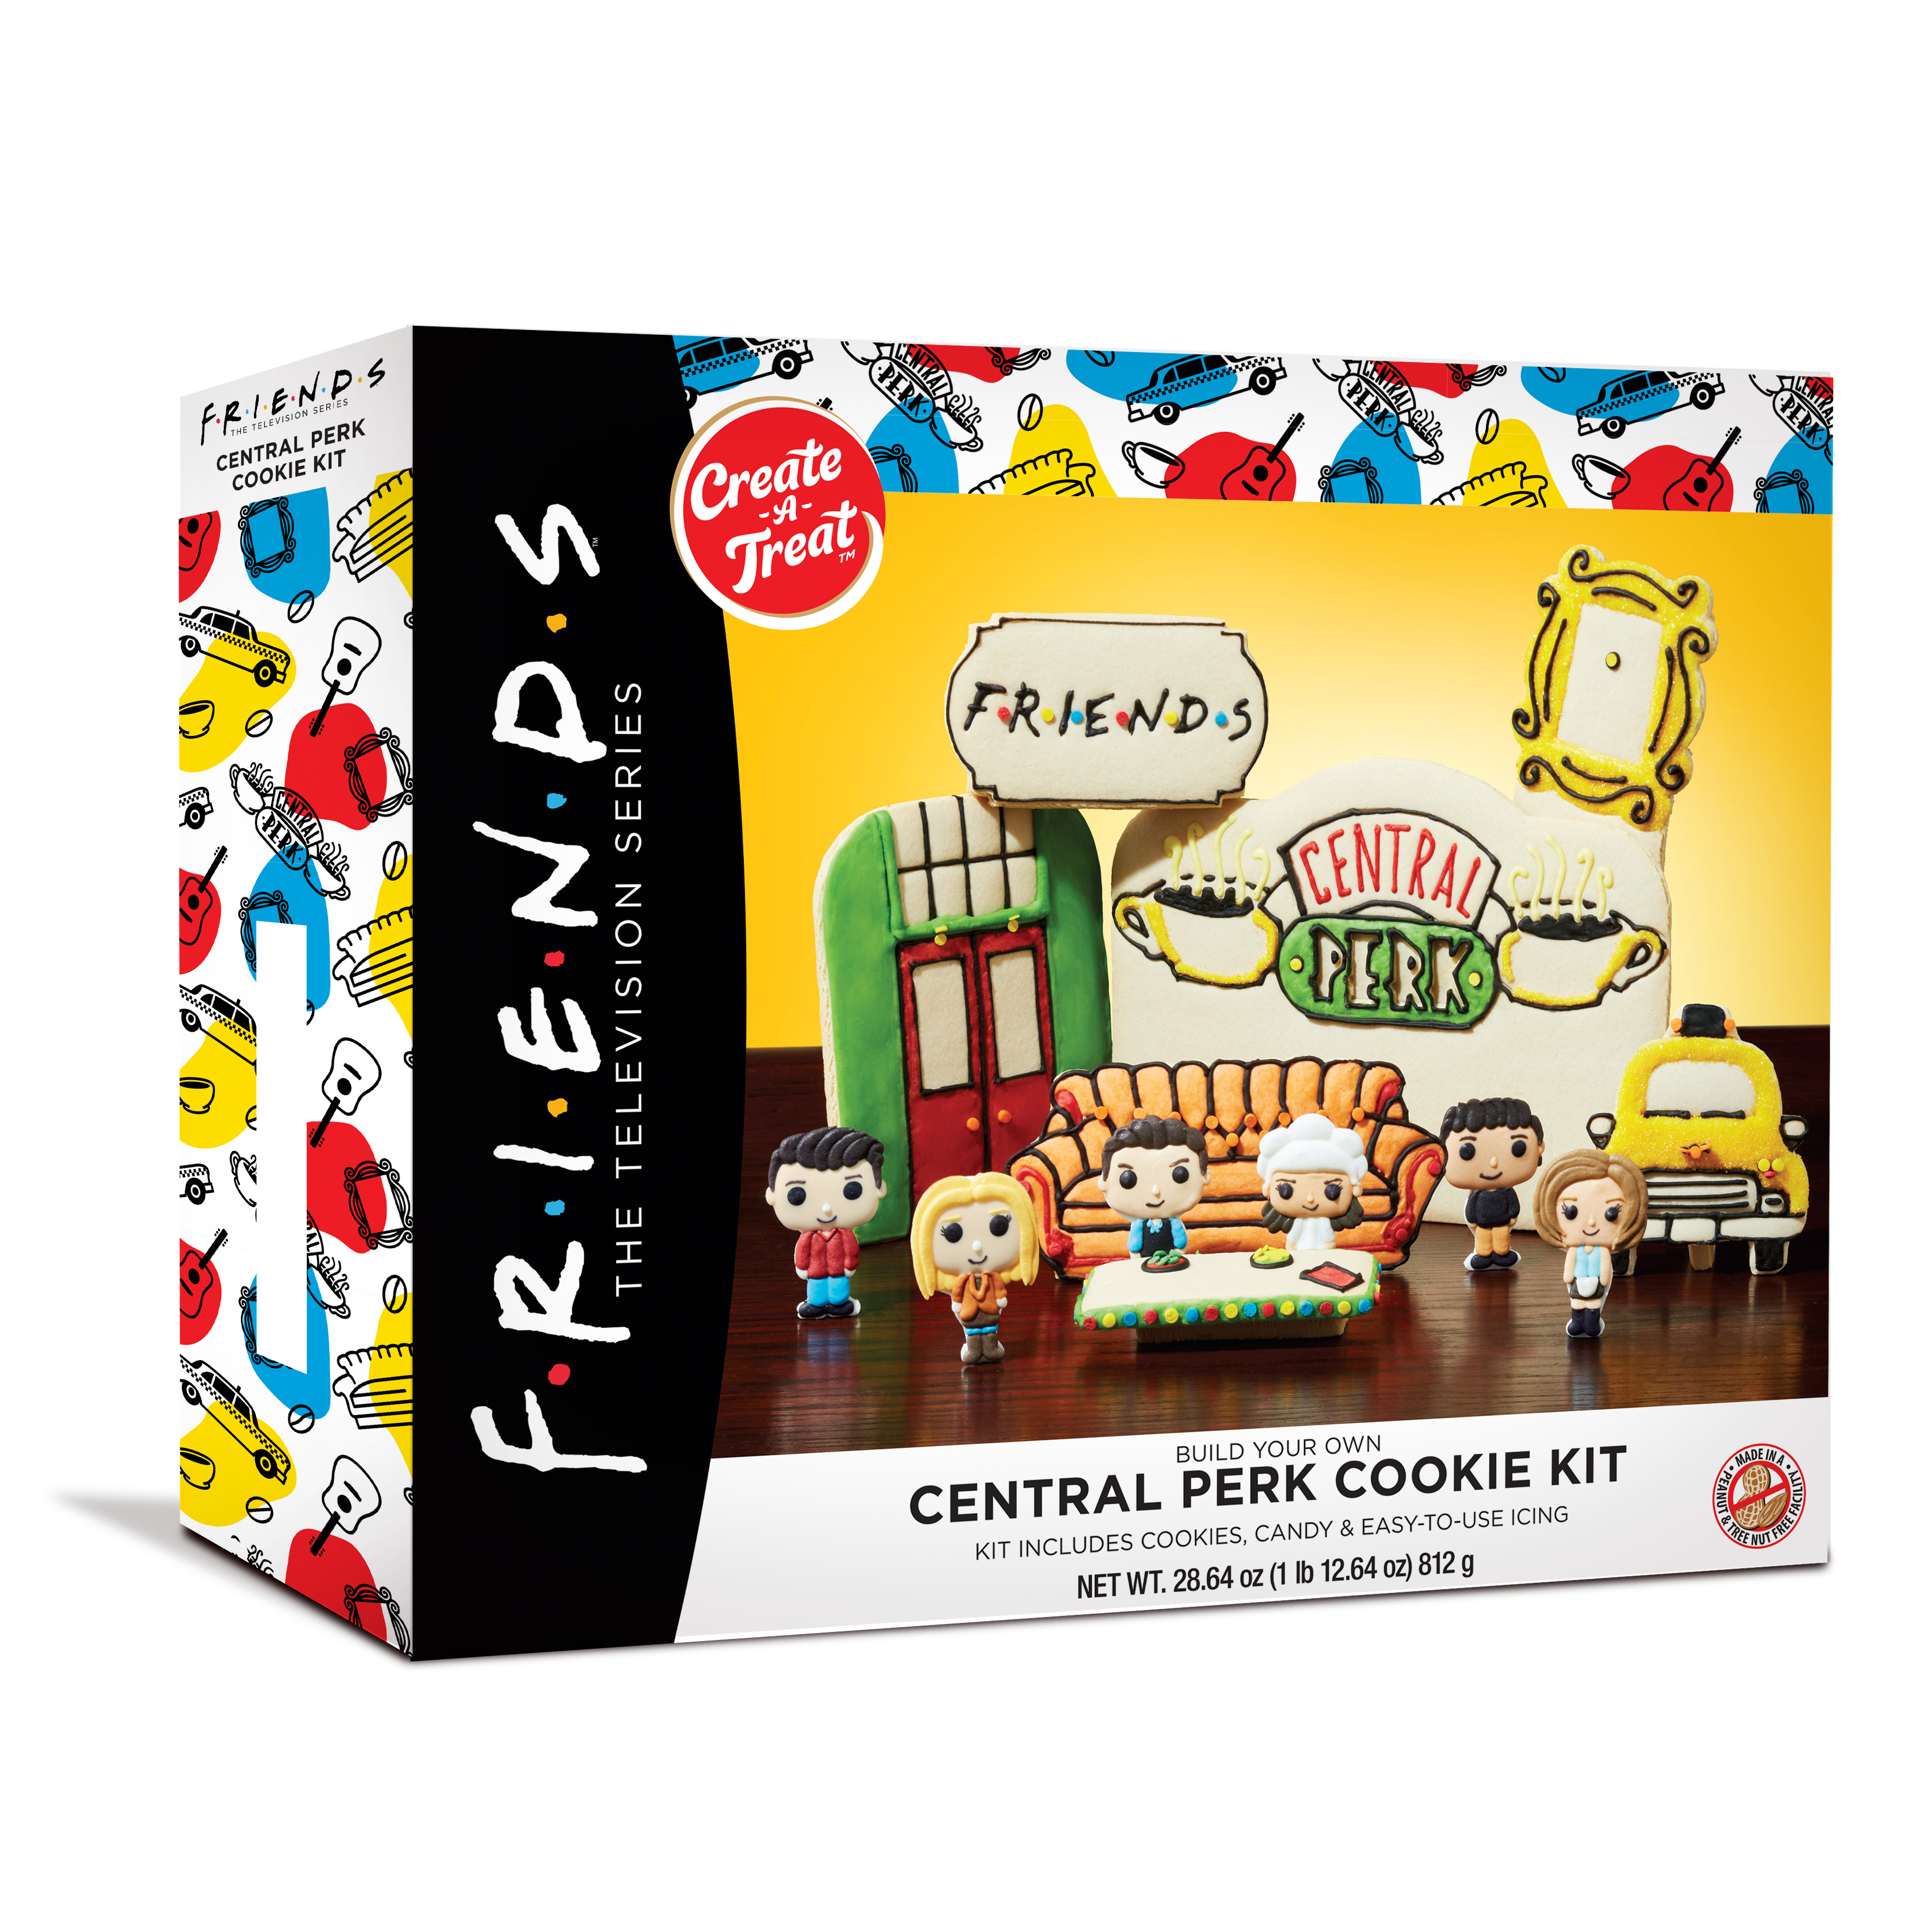 FRIENDS Central Perk Cookie Kit